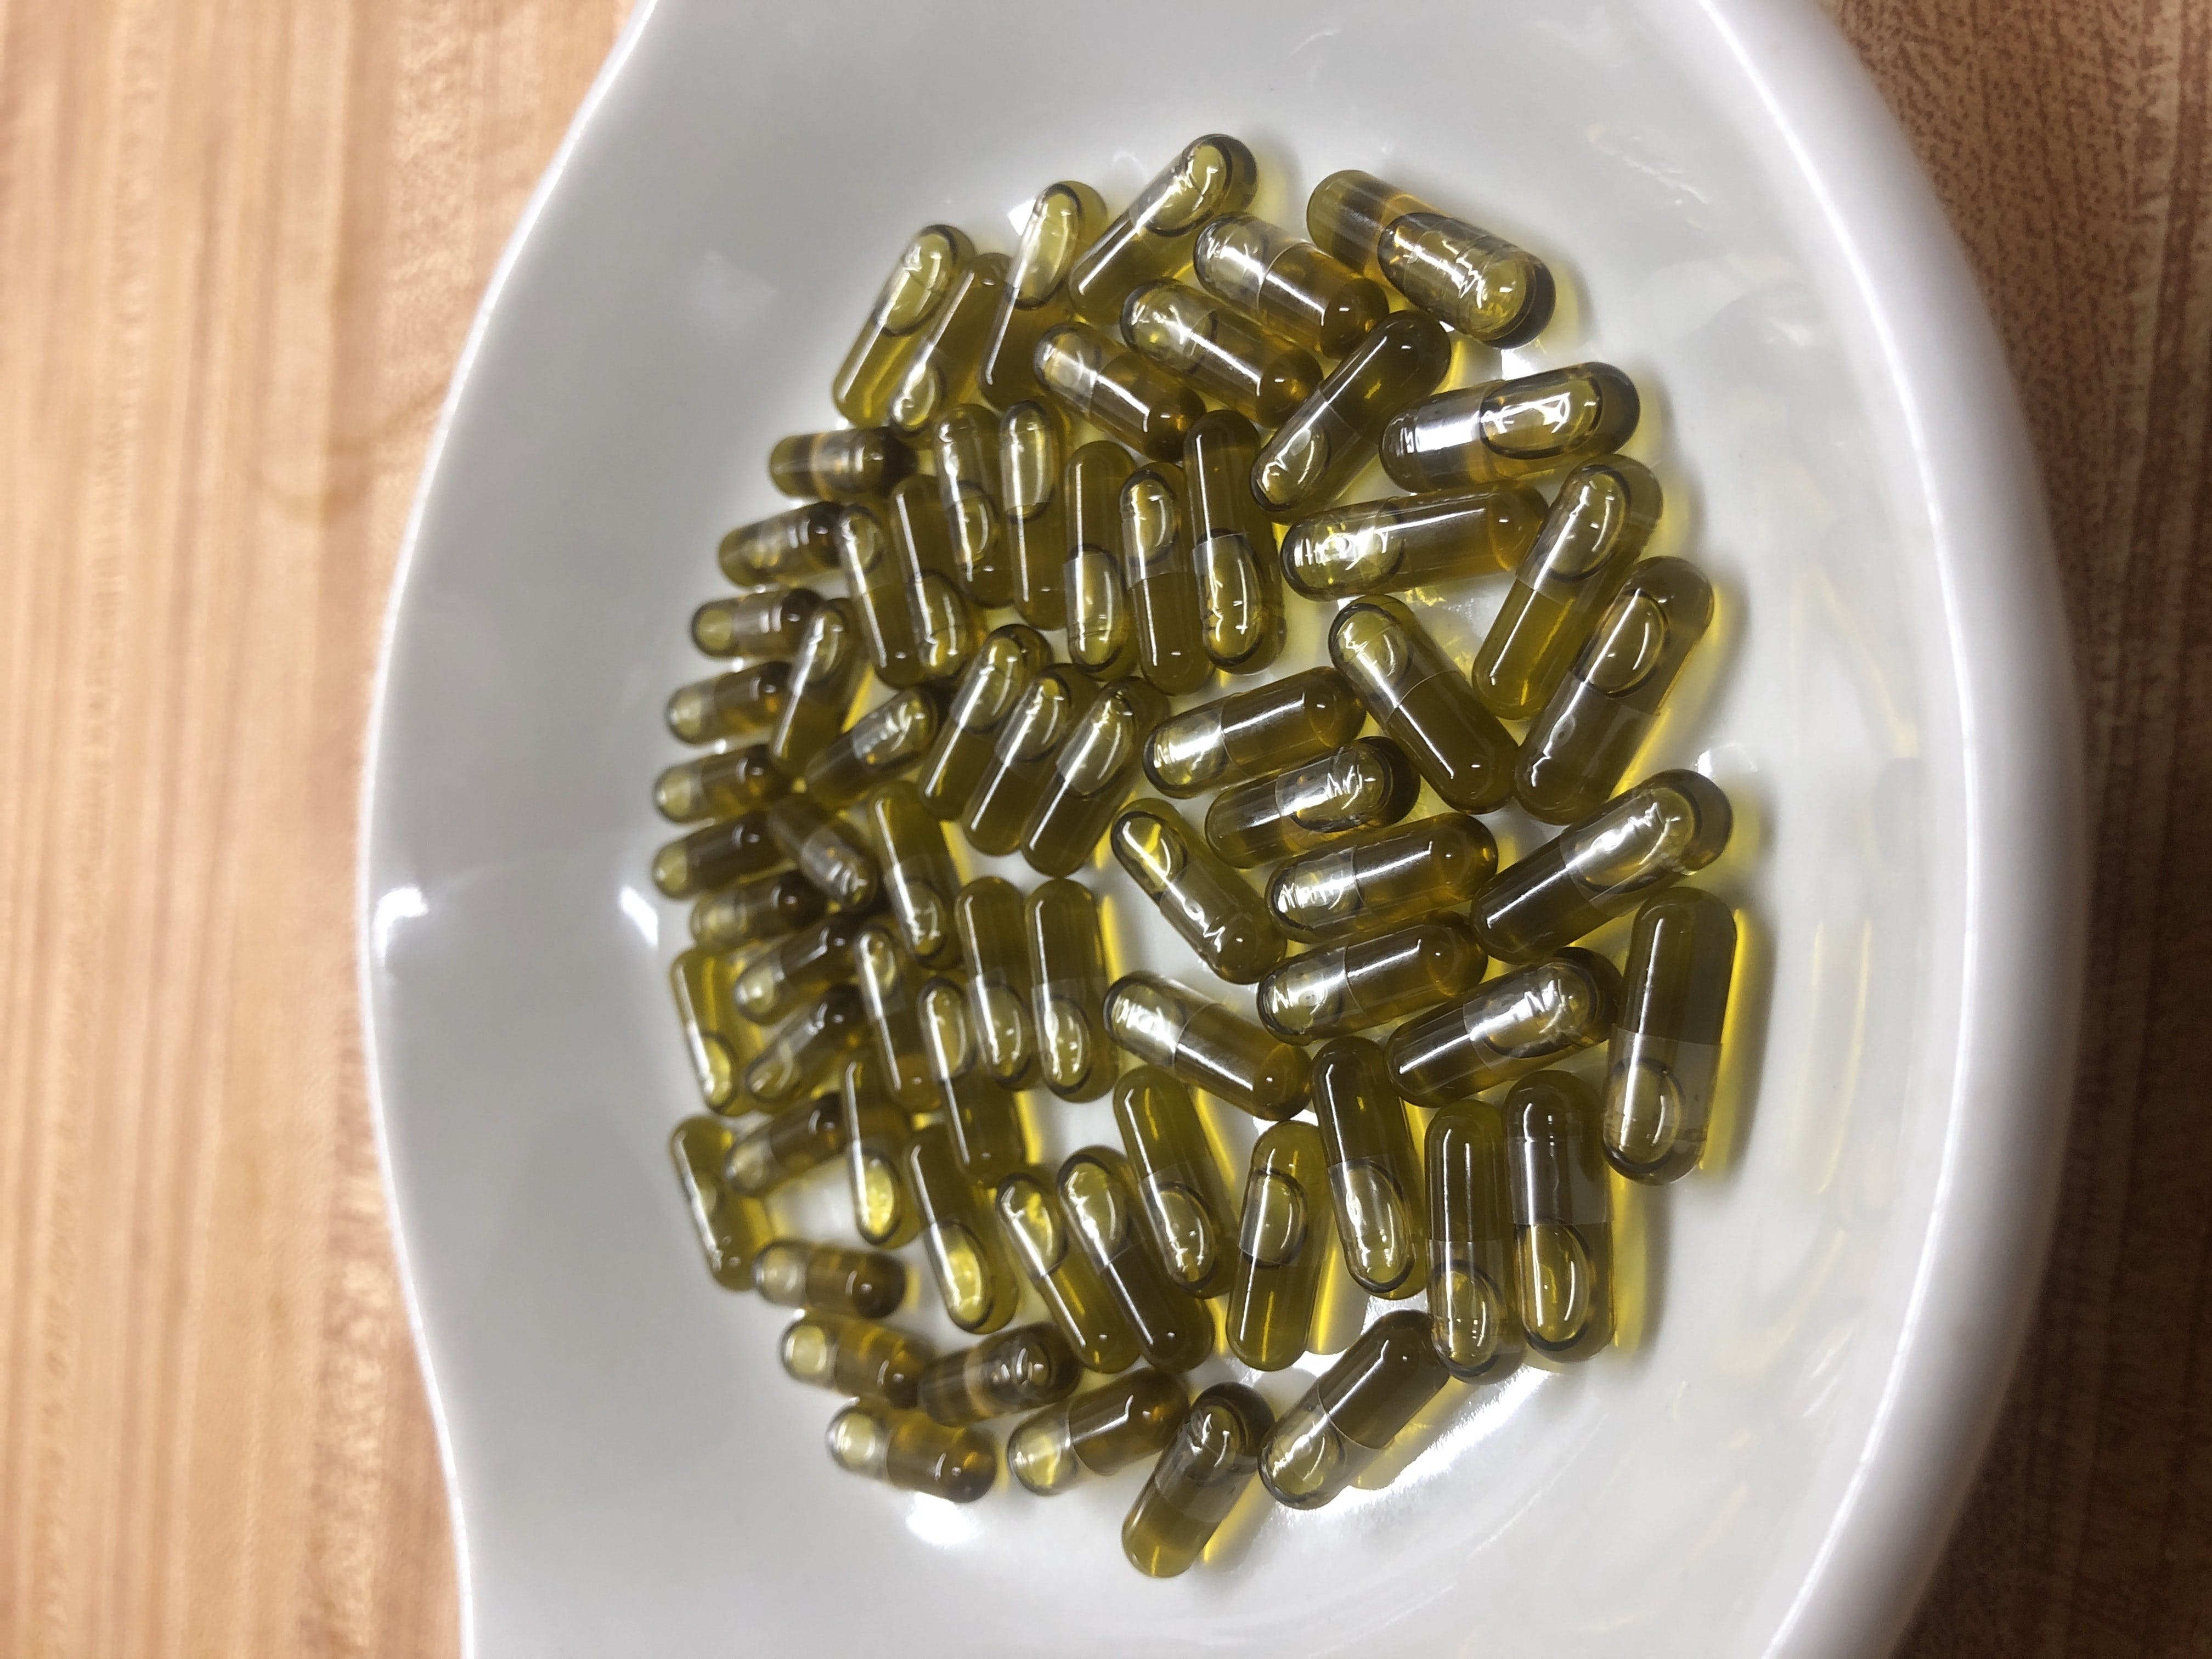 edible-rsorick-simpson-oil-capsules